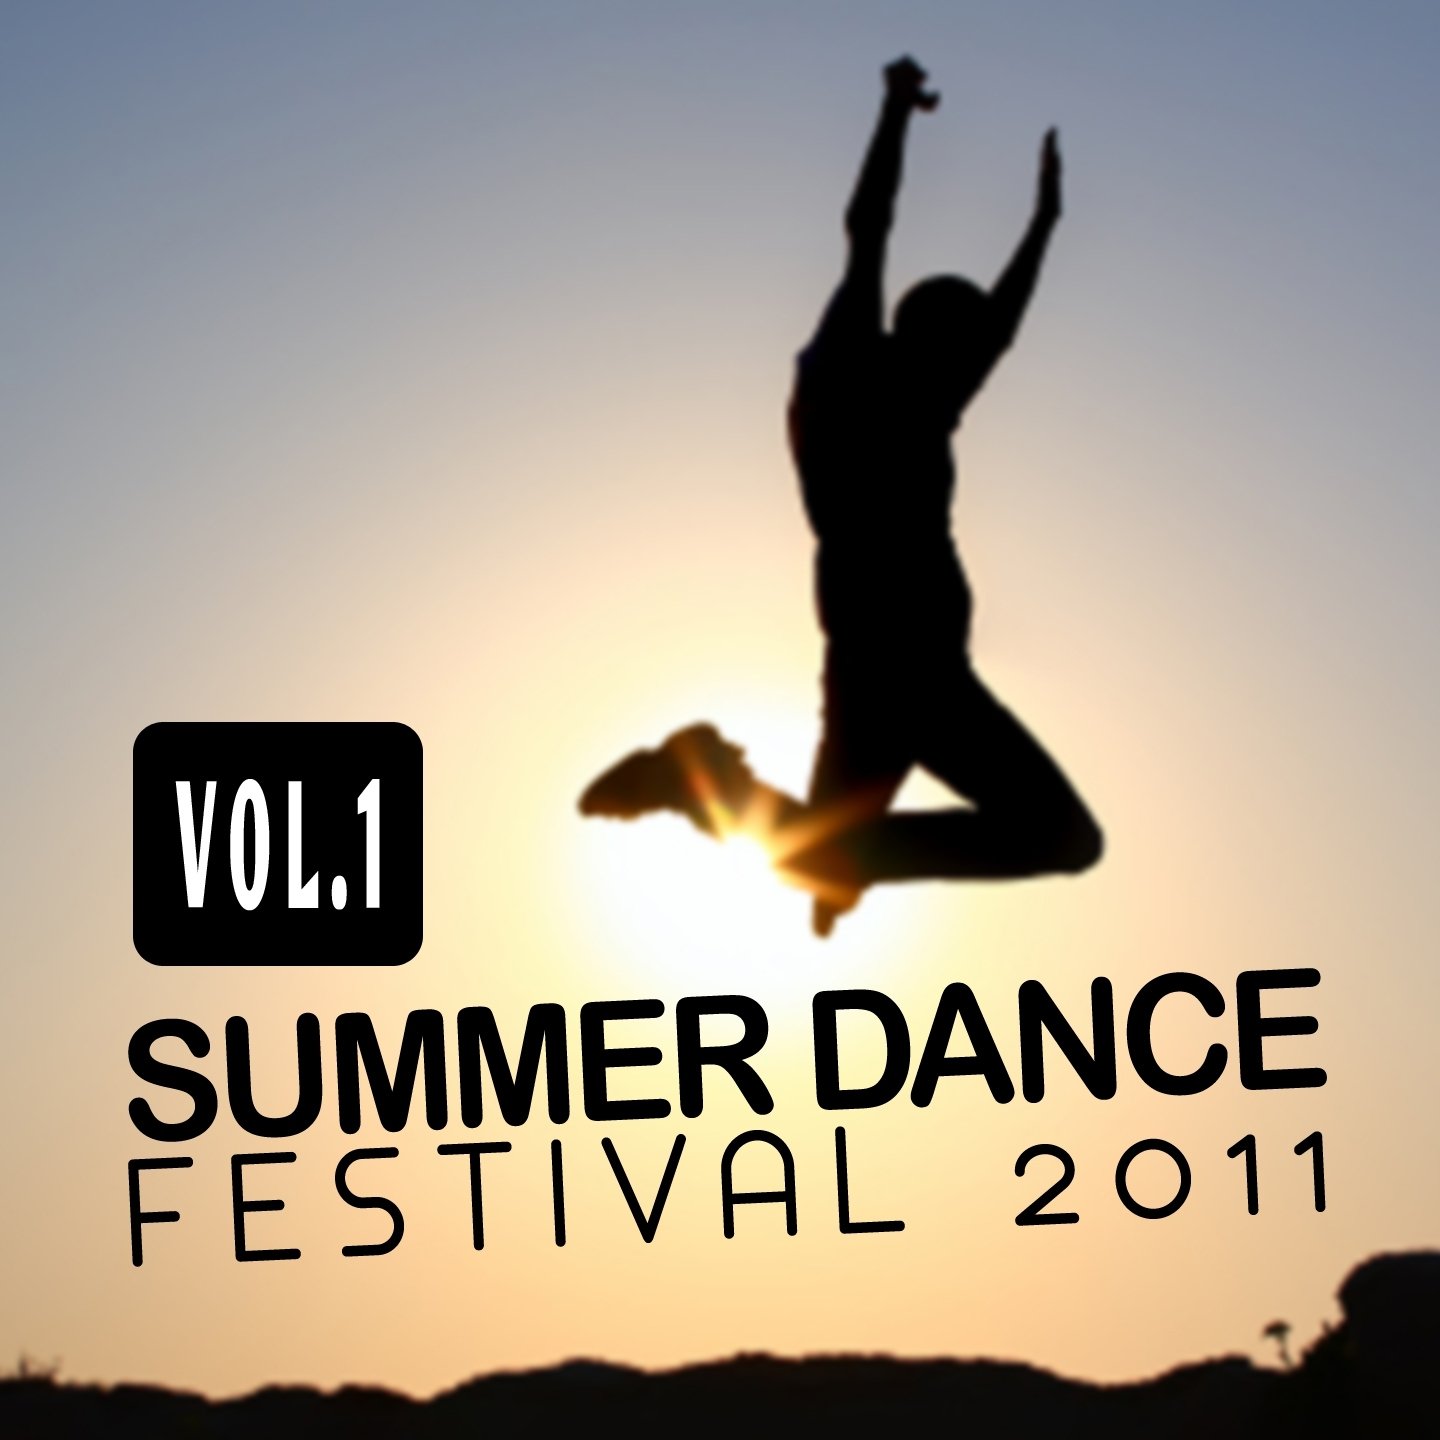 Summer dance remix. Summer Dance обложки. Реклама фестиваля танцев. Баннер на фестиваль танца. Объявление на танцы.